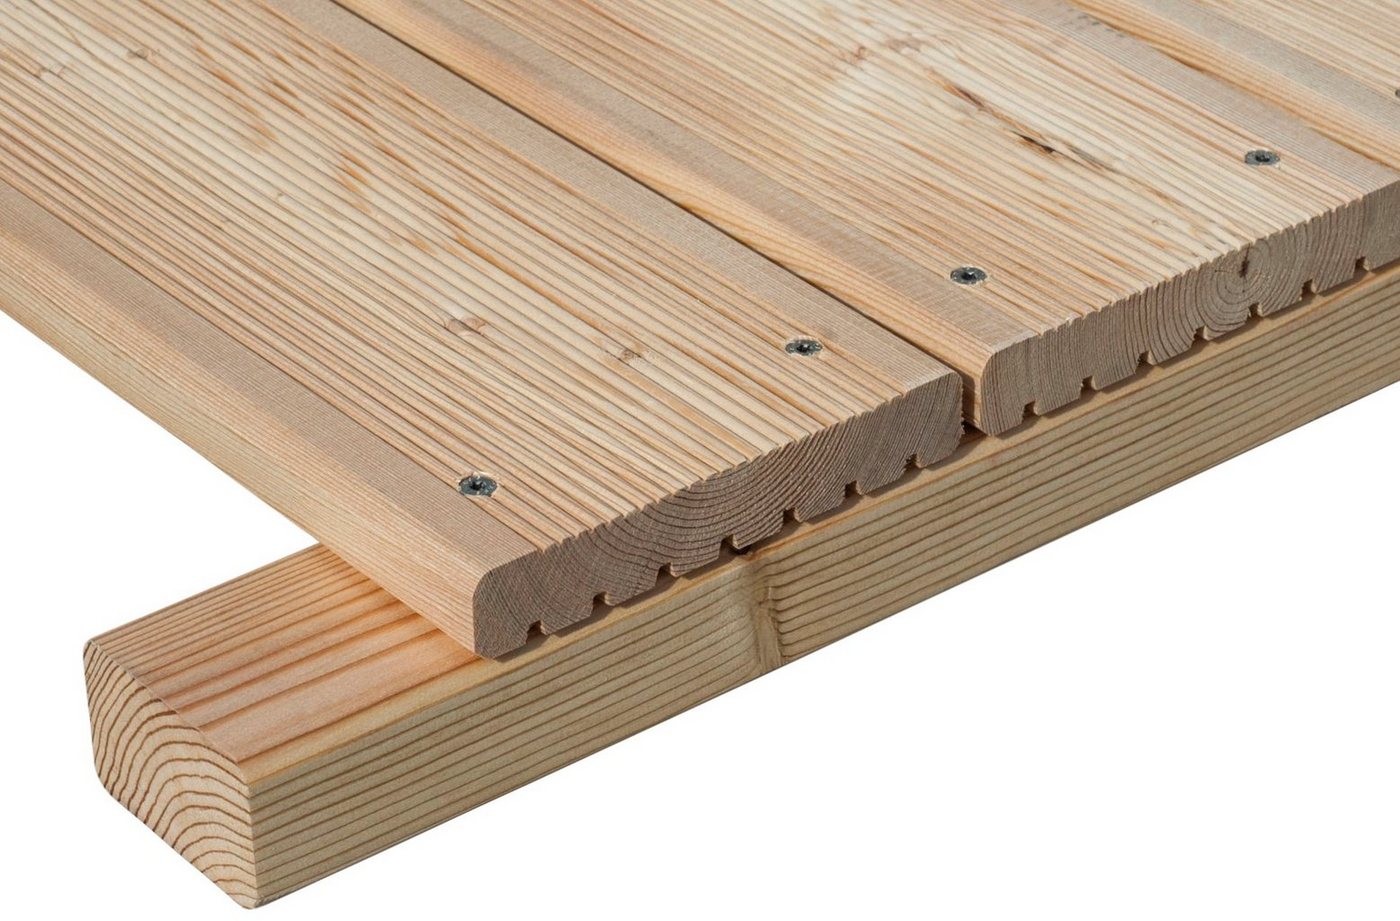 BM Massivholz Terrassendielen, 12 m², BxL: je 14x200 cm, 24 mm Stärke, mit Unterkonstruktion von BM Massivholz